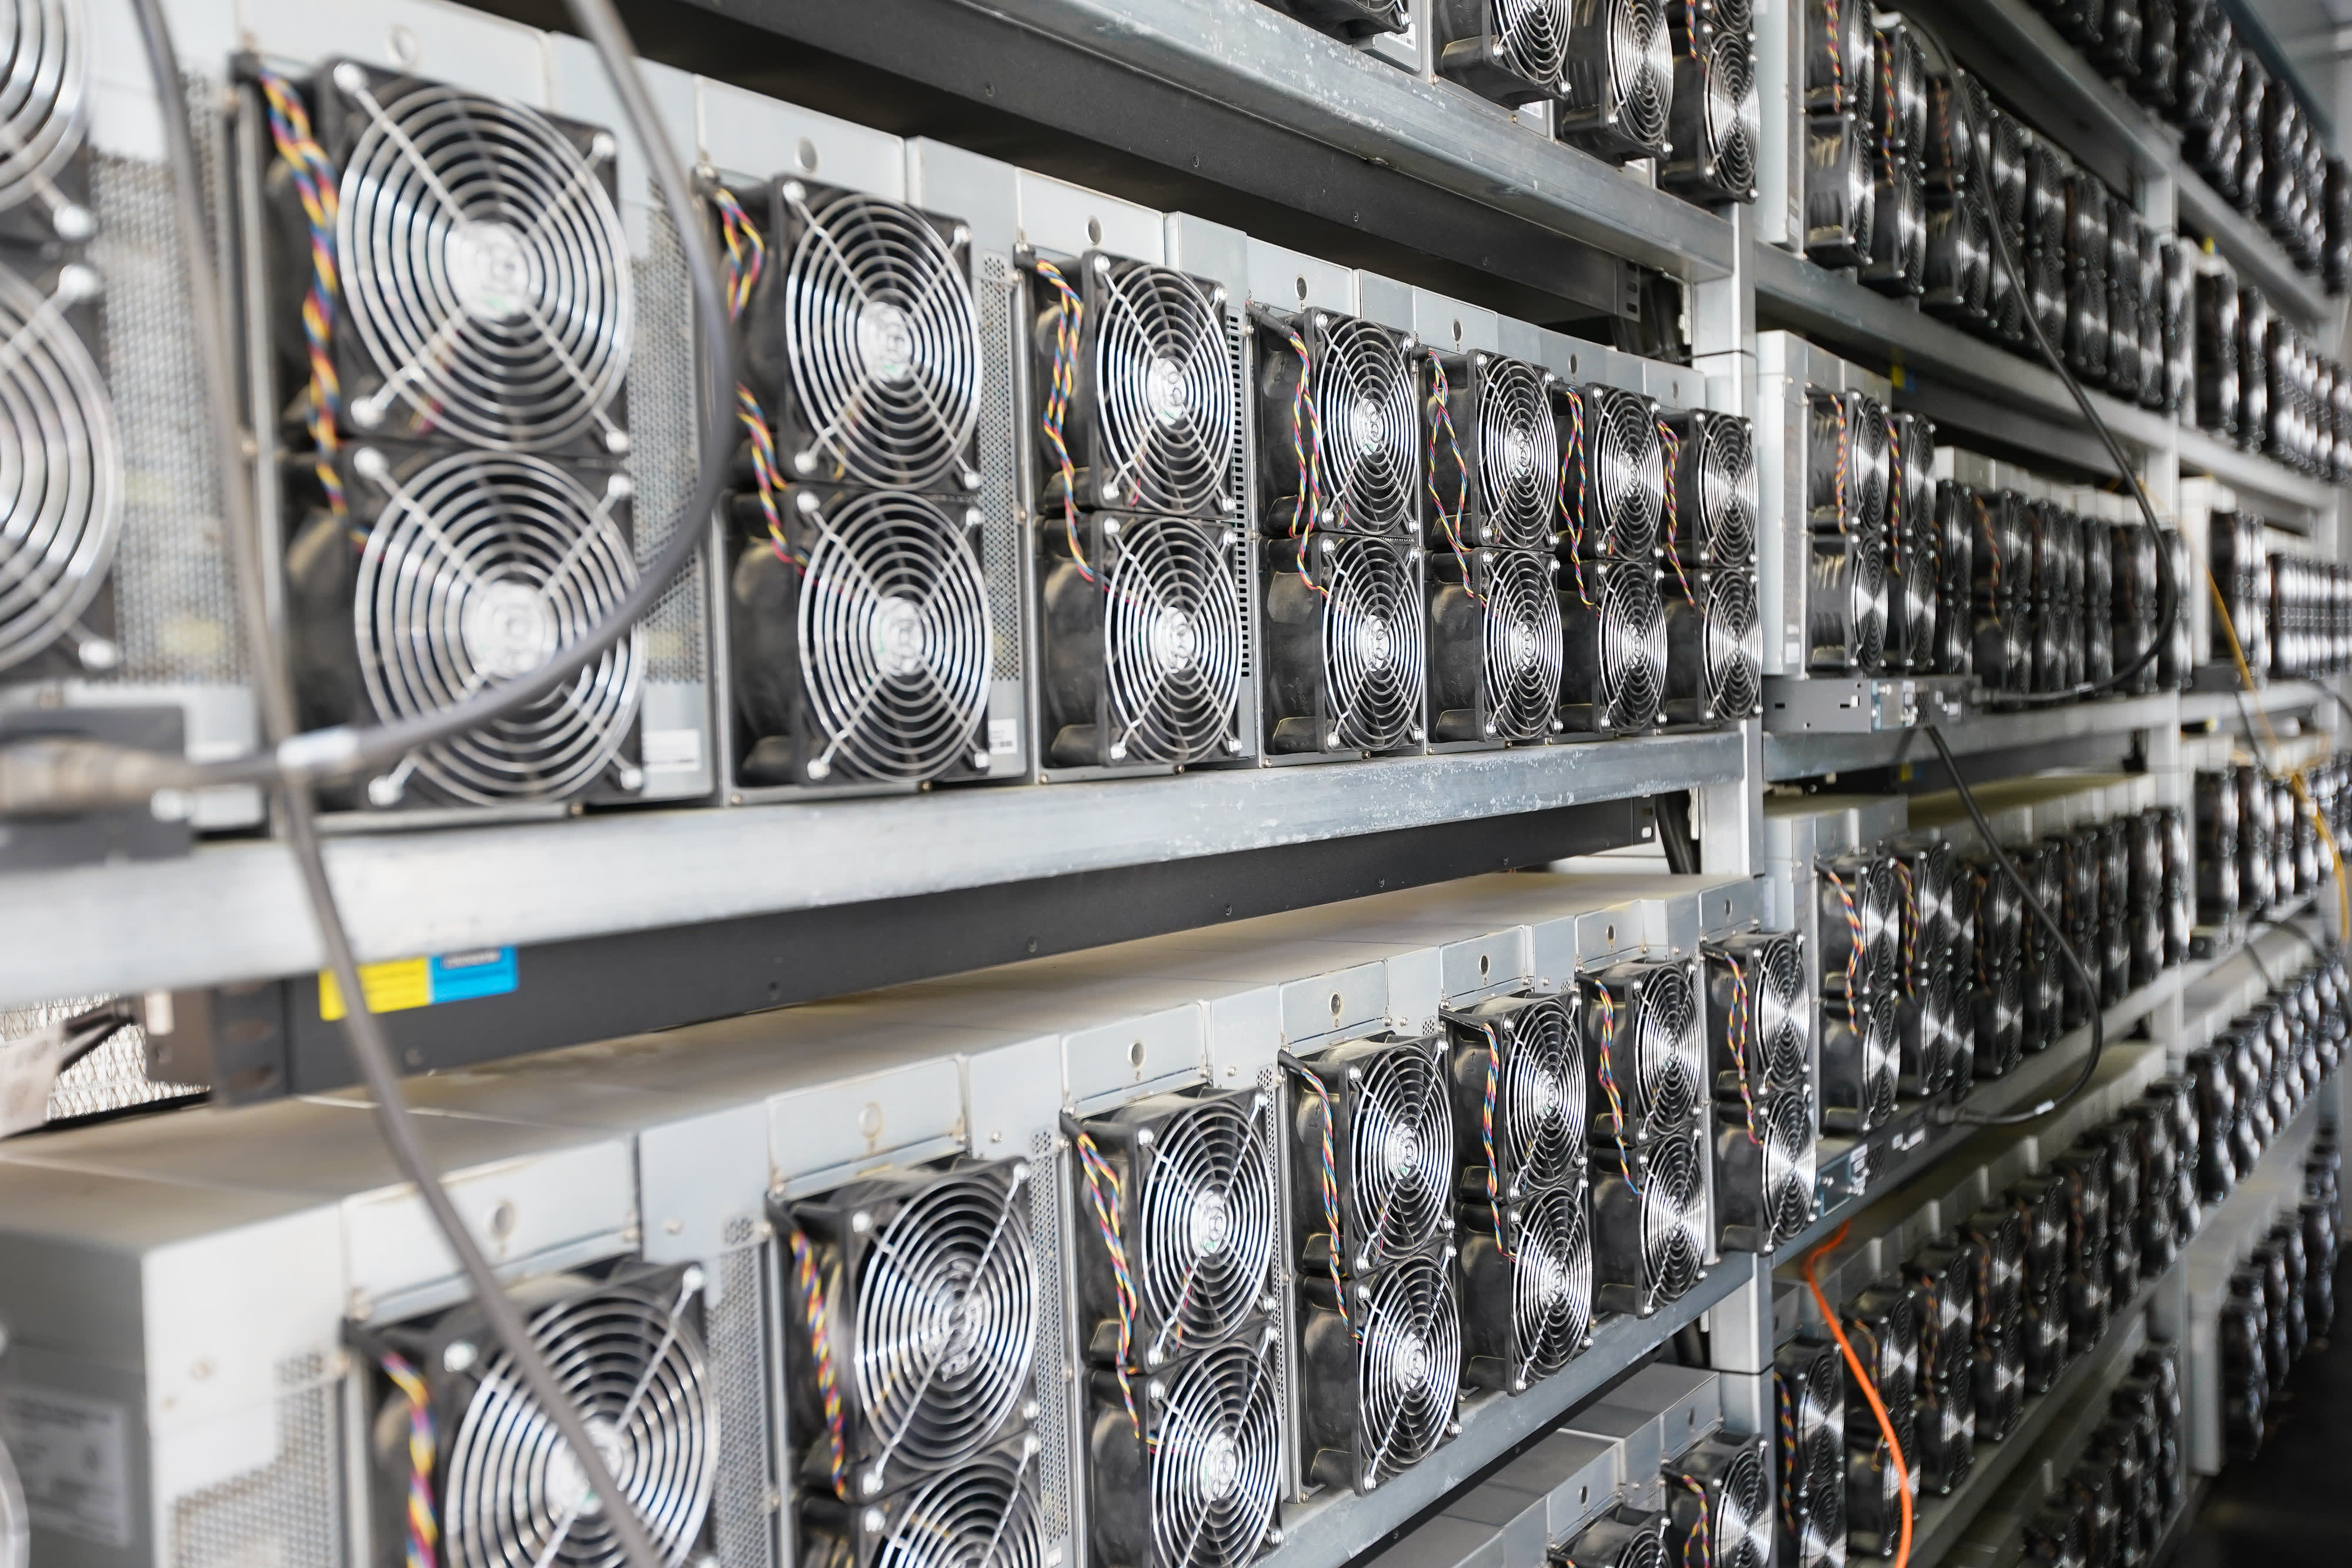 Bitcoin miner Core Scientific warns it might go bankrupt, stock